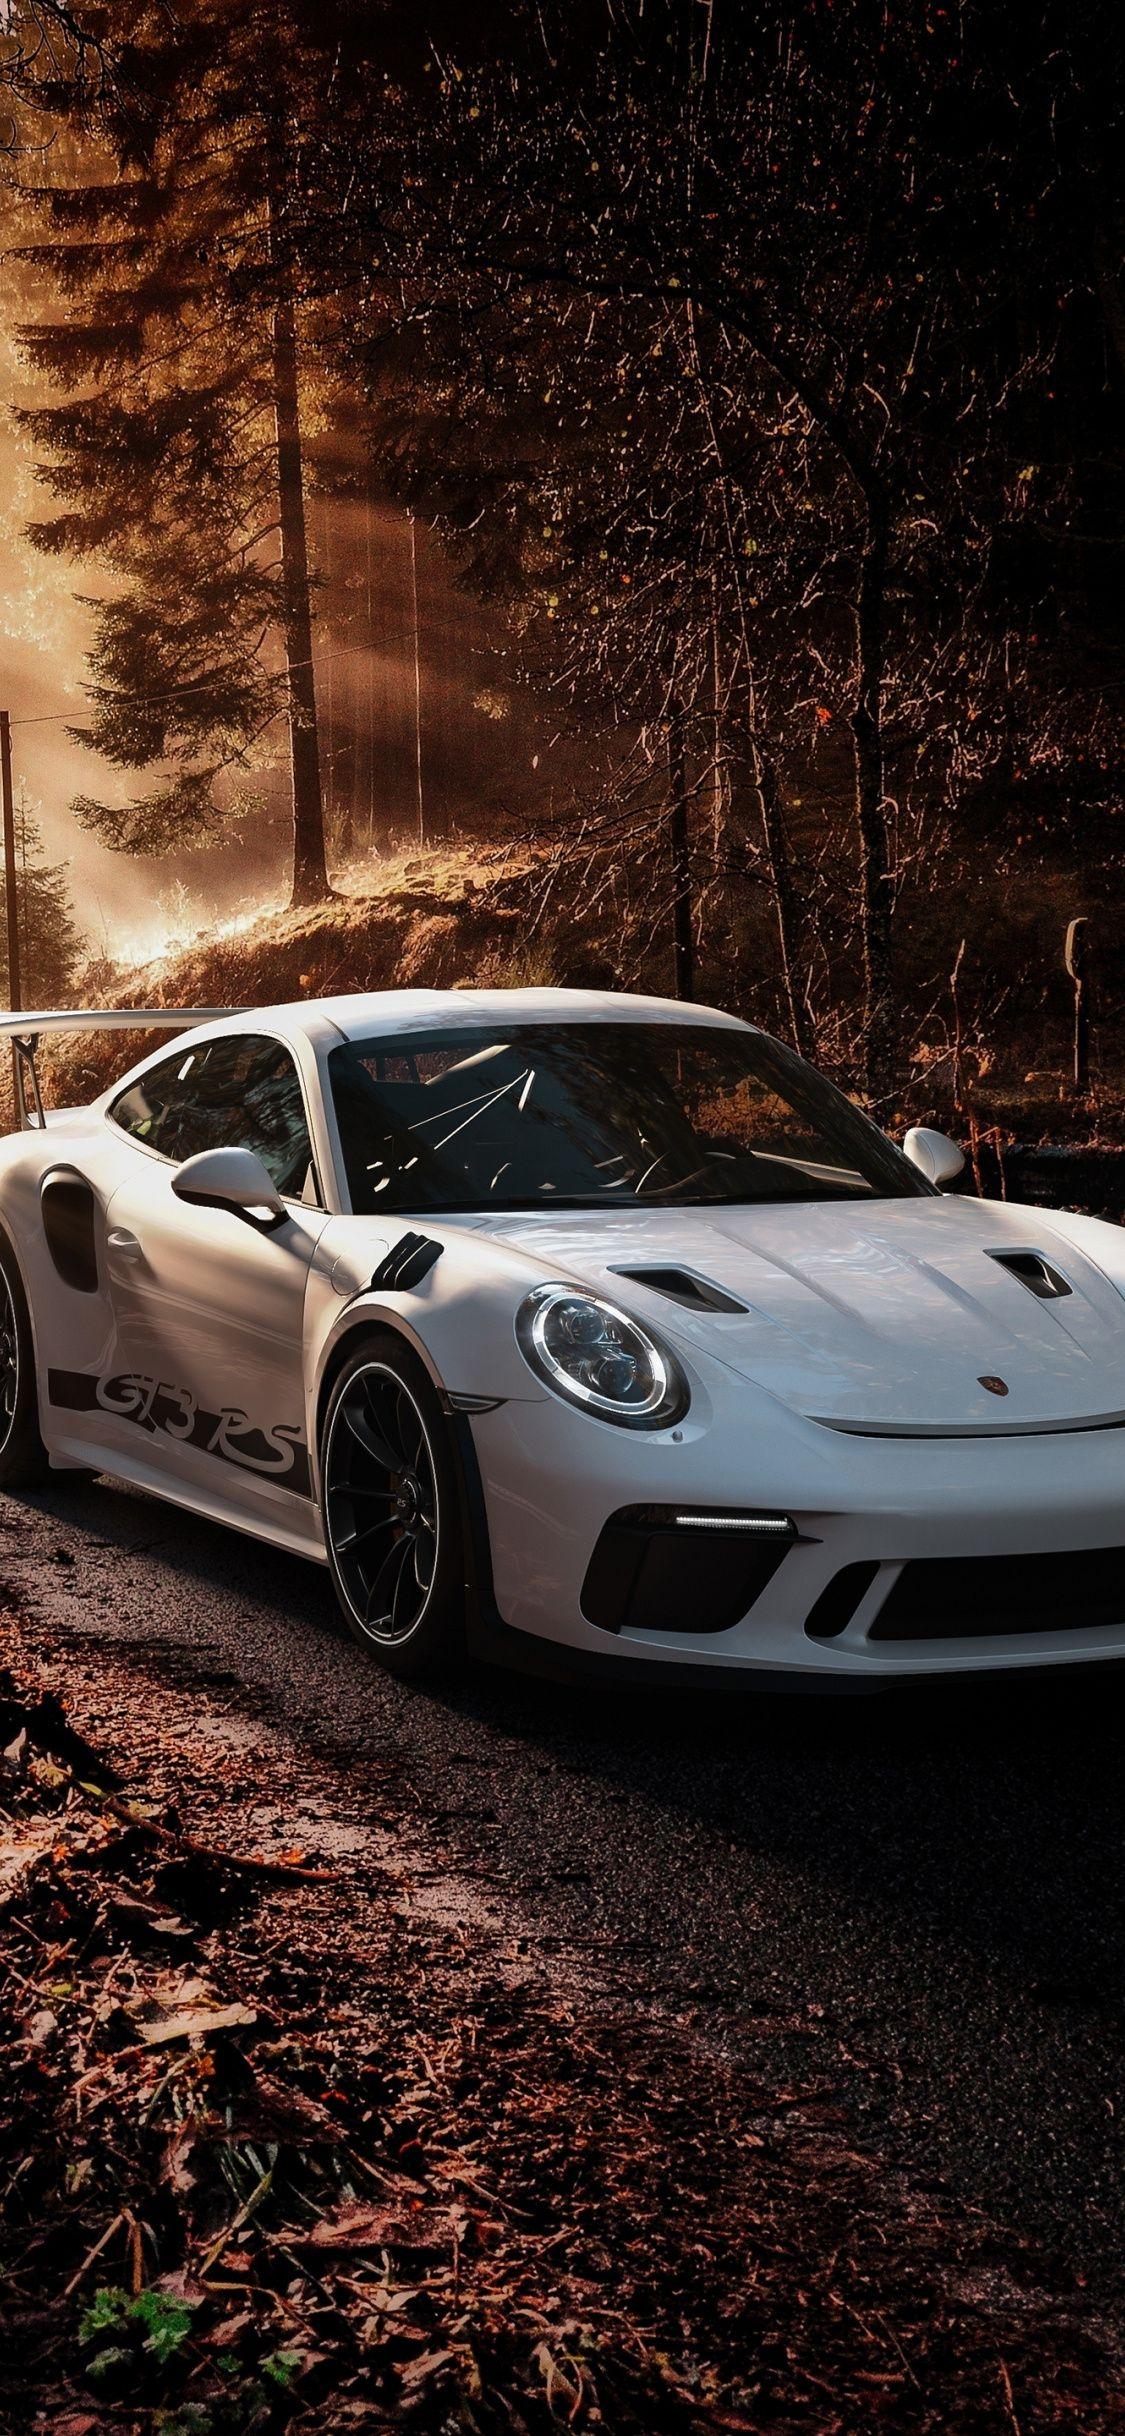 Porsche 911 Iphone Wallpapers Top Free Porsche 911 Iphone Backgrounds Wallpaperaccess